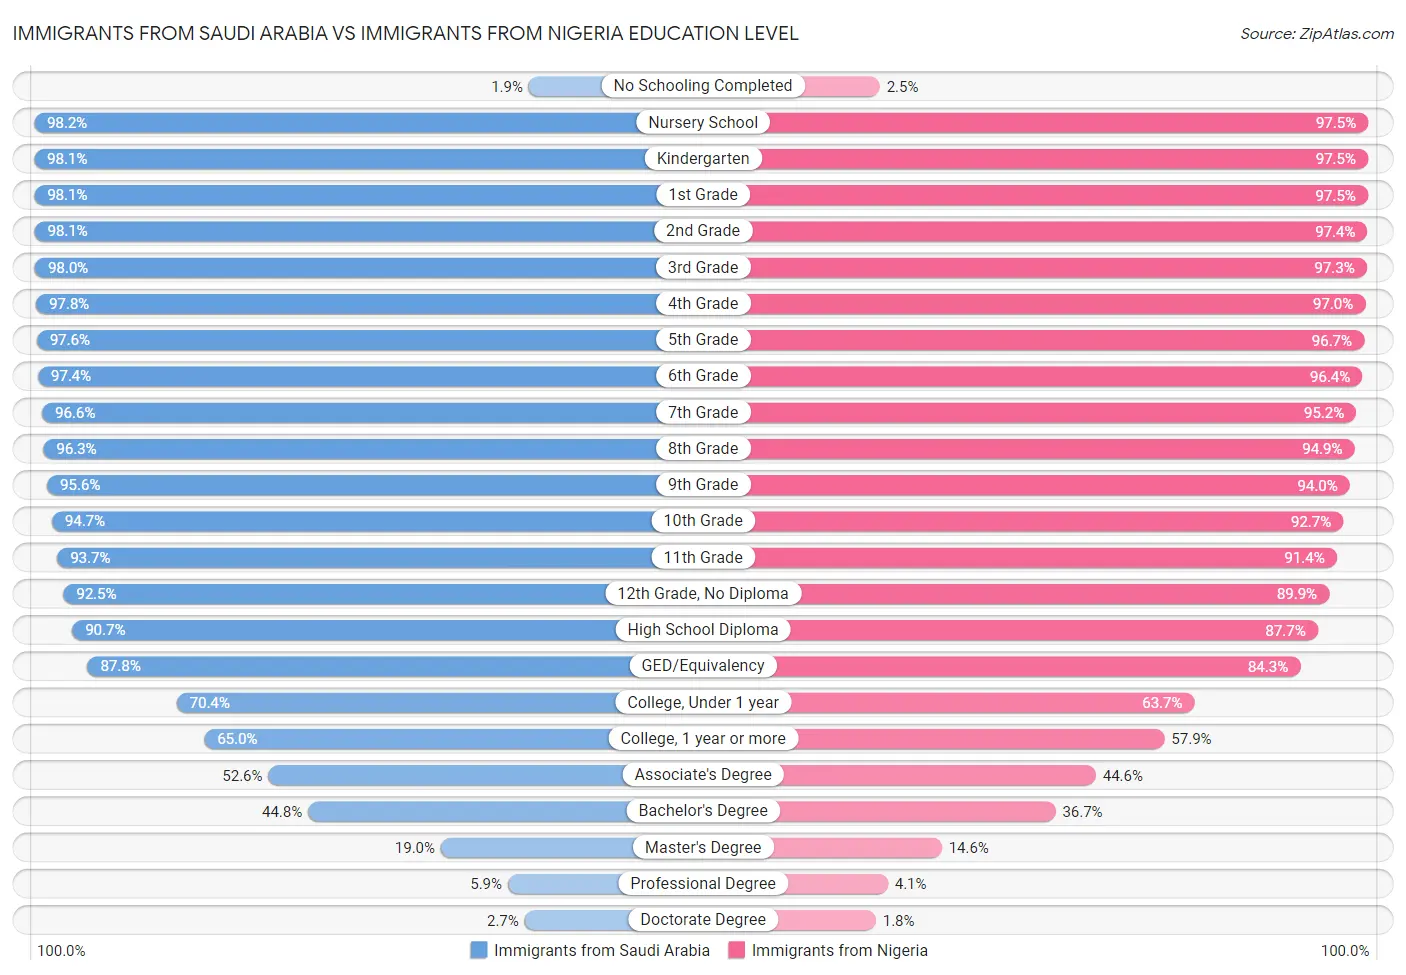 Immigrants from Saudi Arabia vs Immigrants from Nigeria Education Level